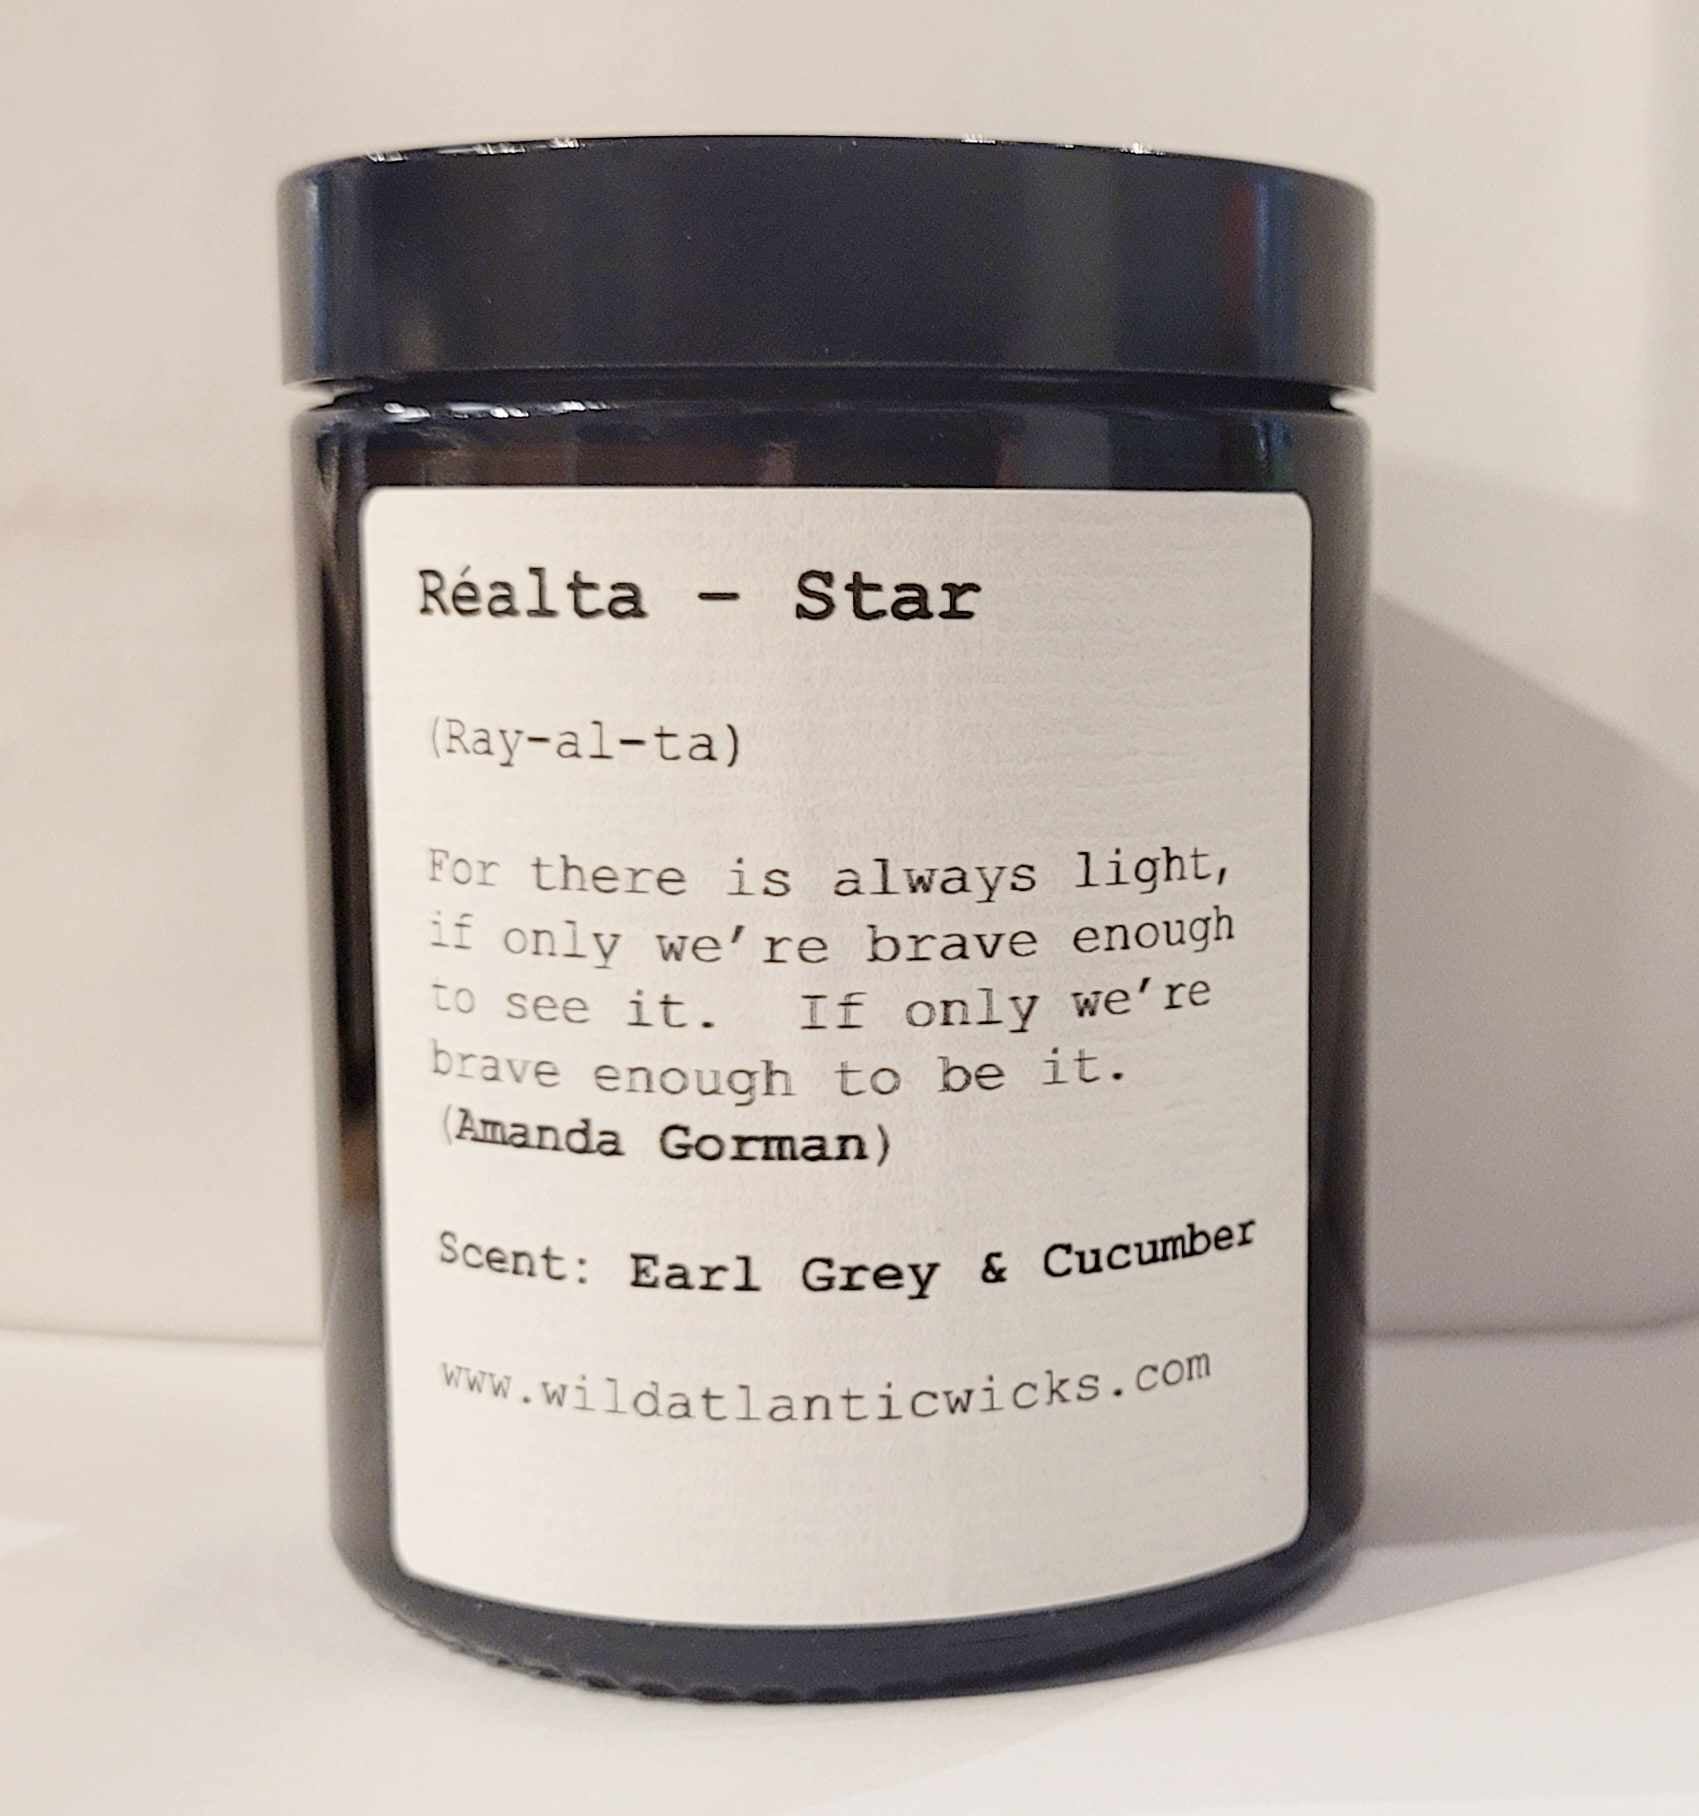 Réalta - Star Candle by Wild Atlantic Wicks